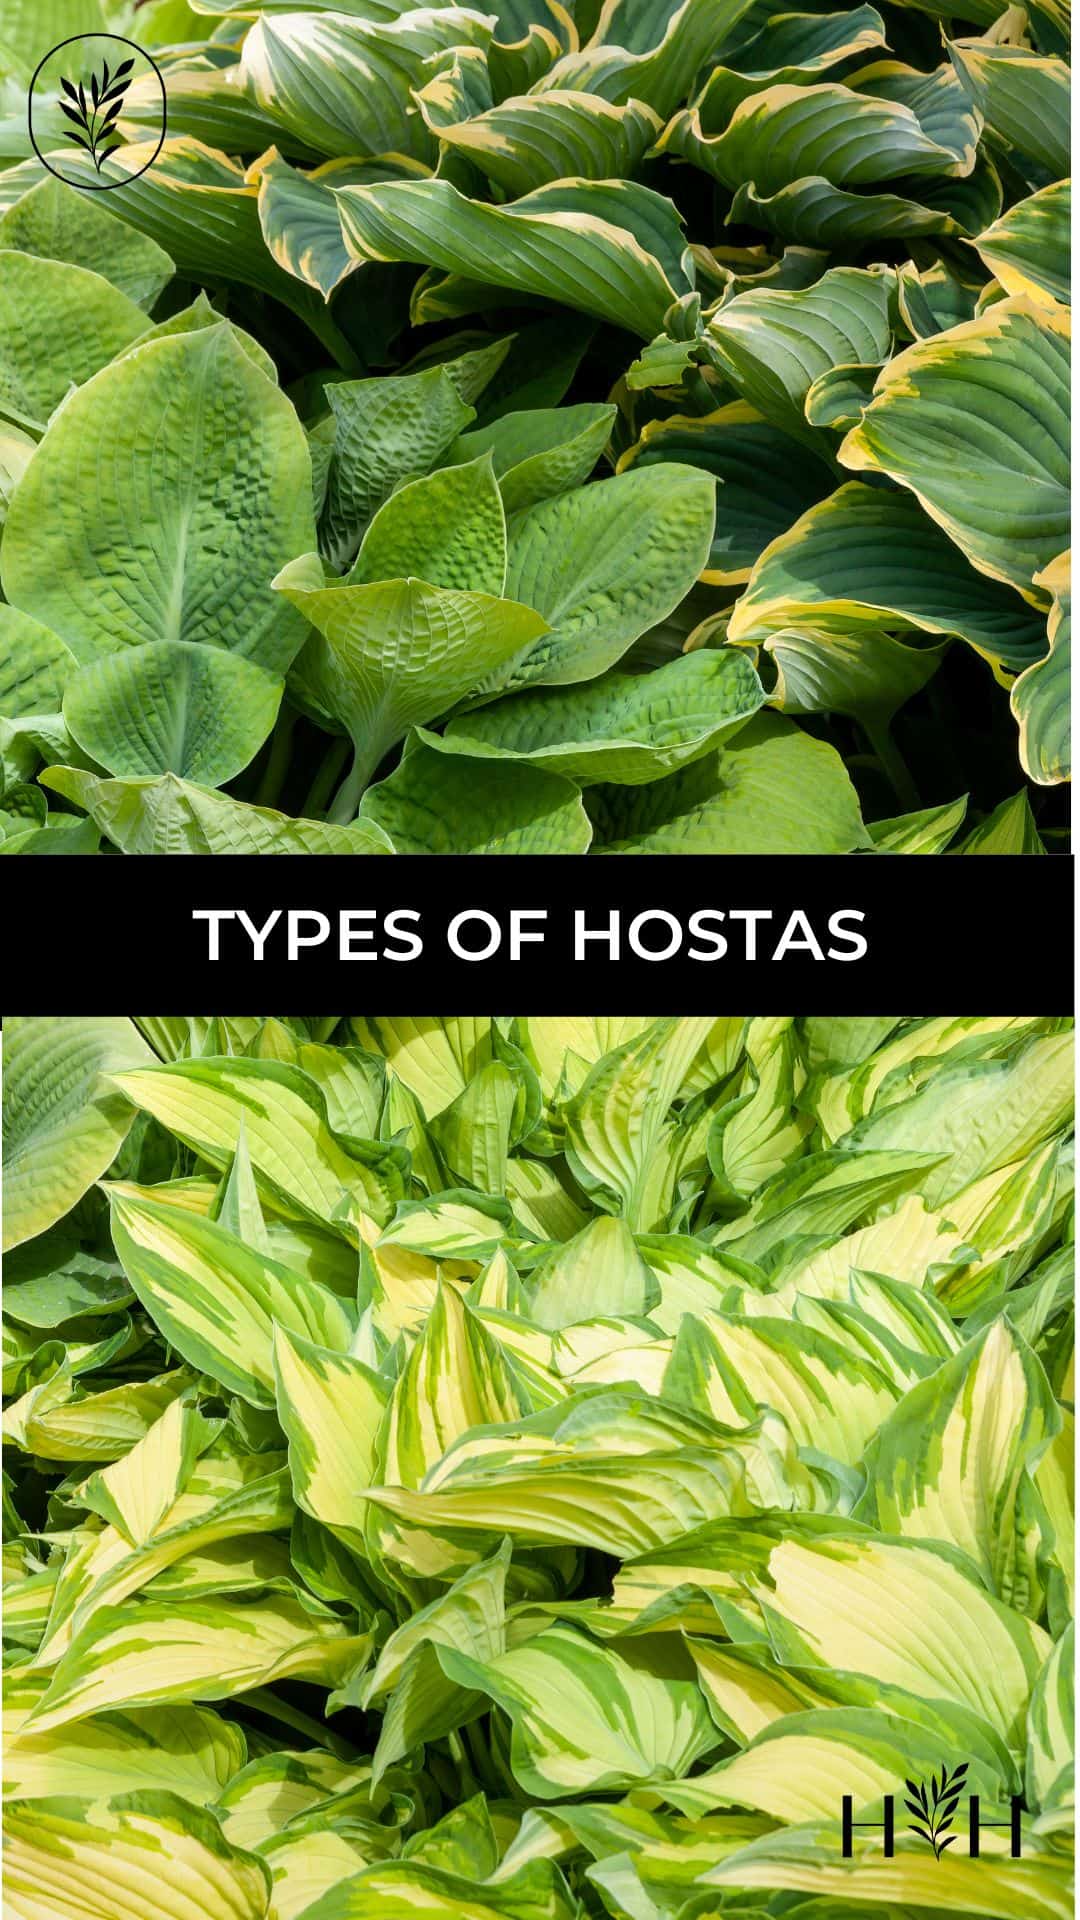 Types of hostas via @home4theharvest